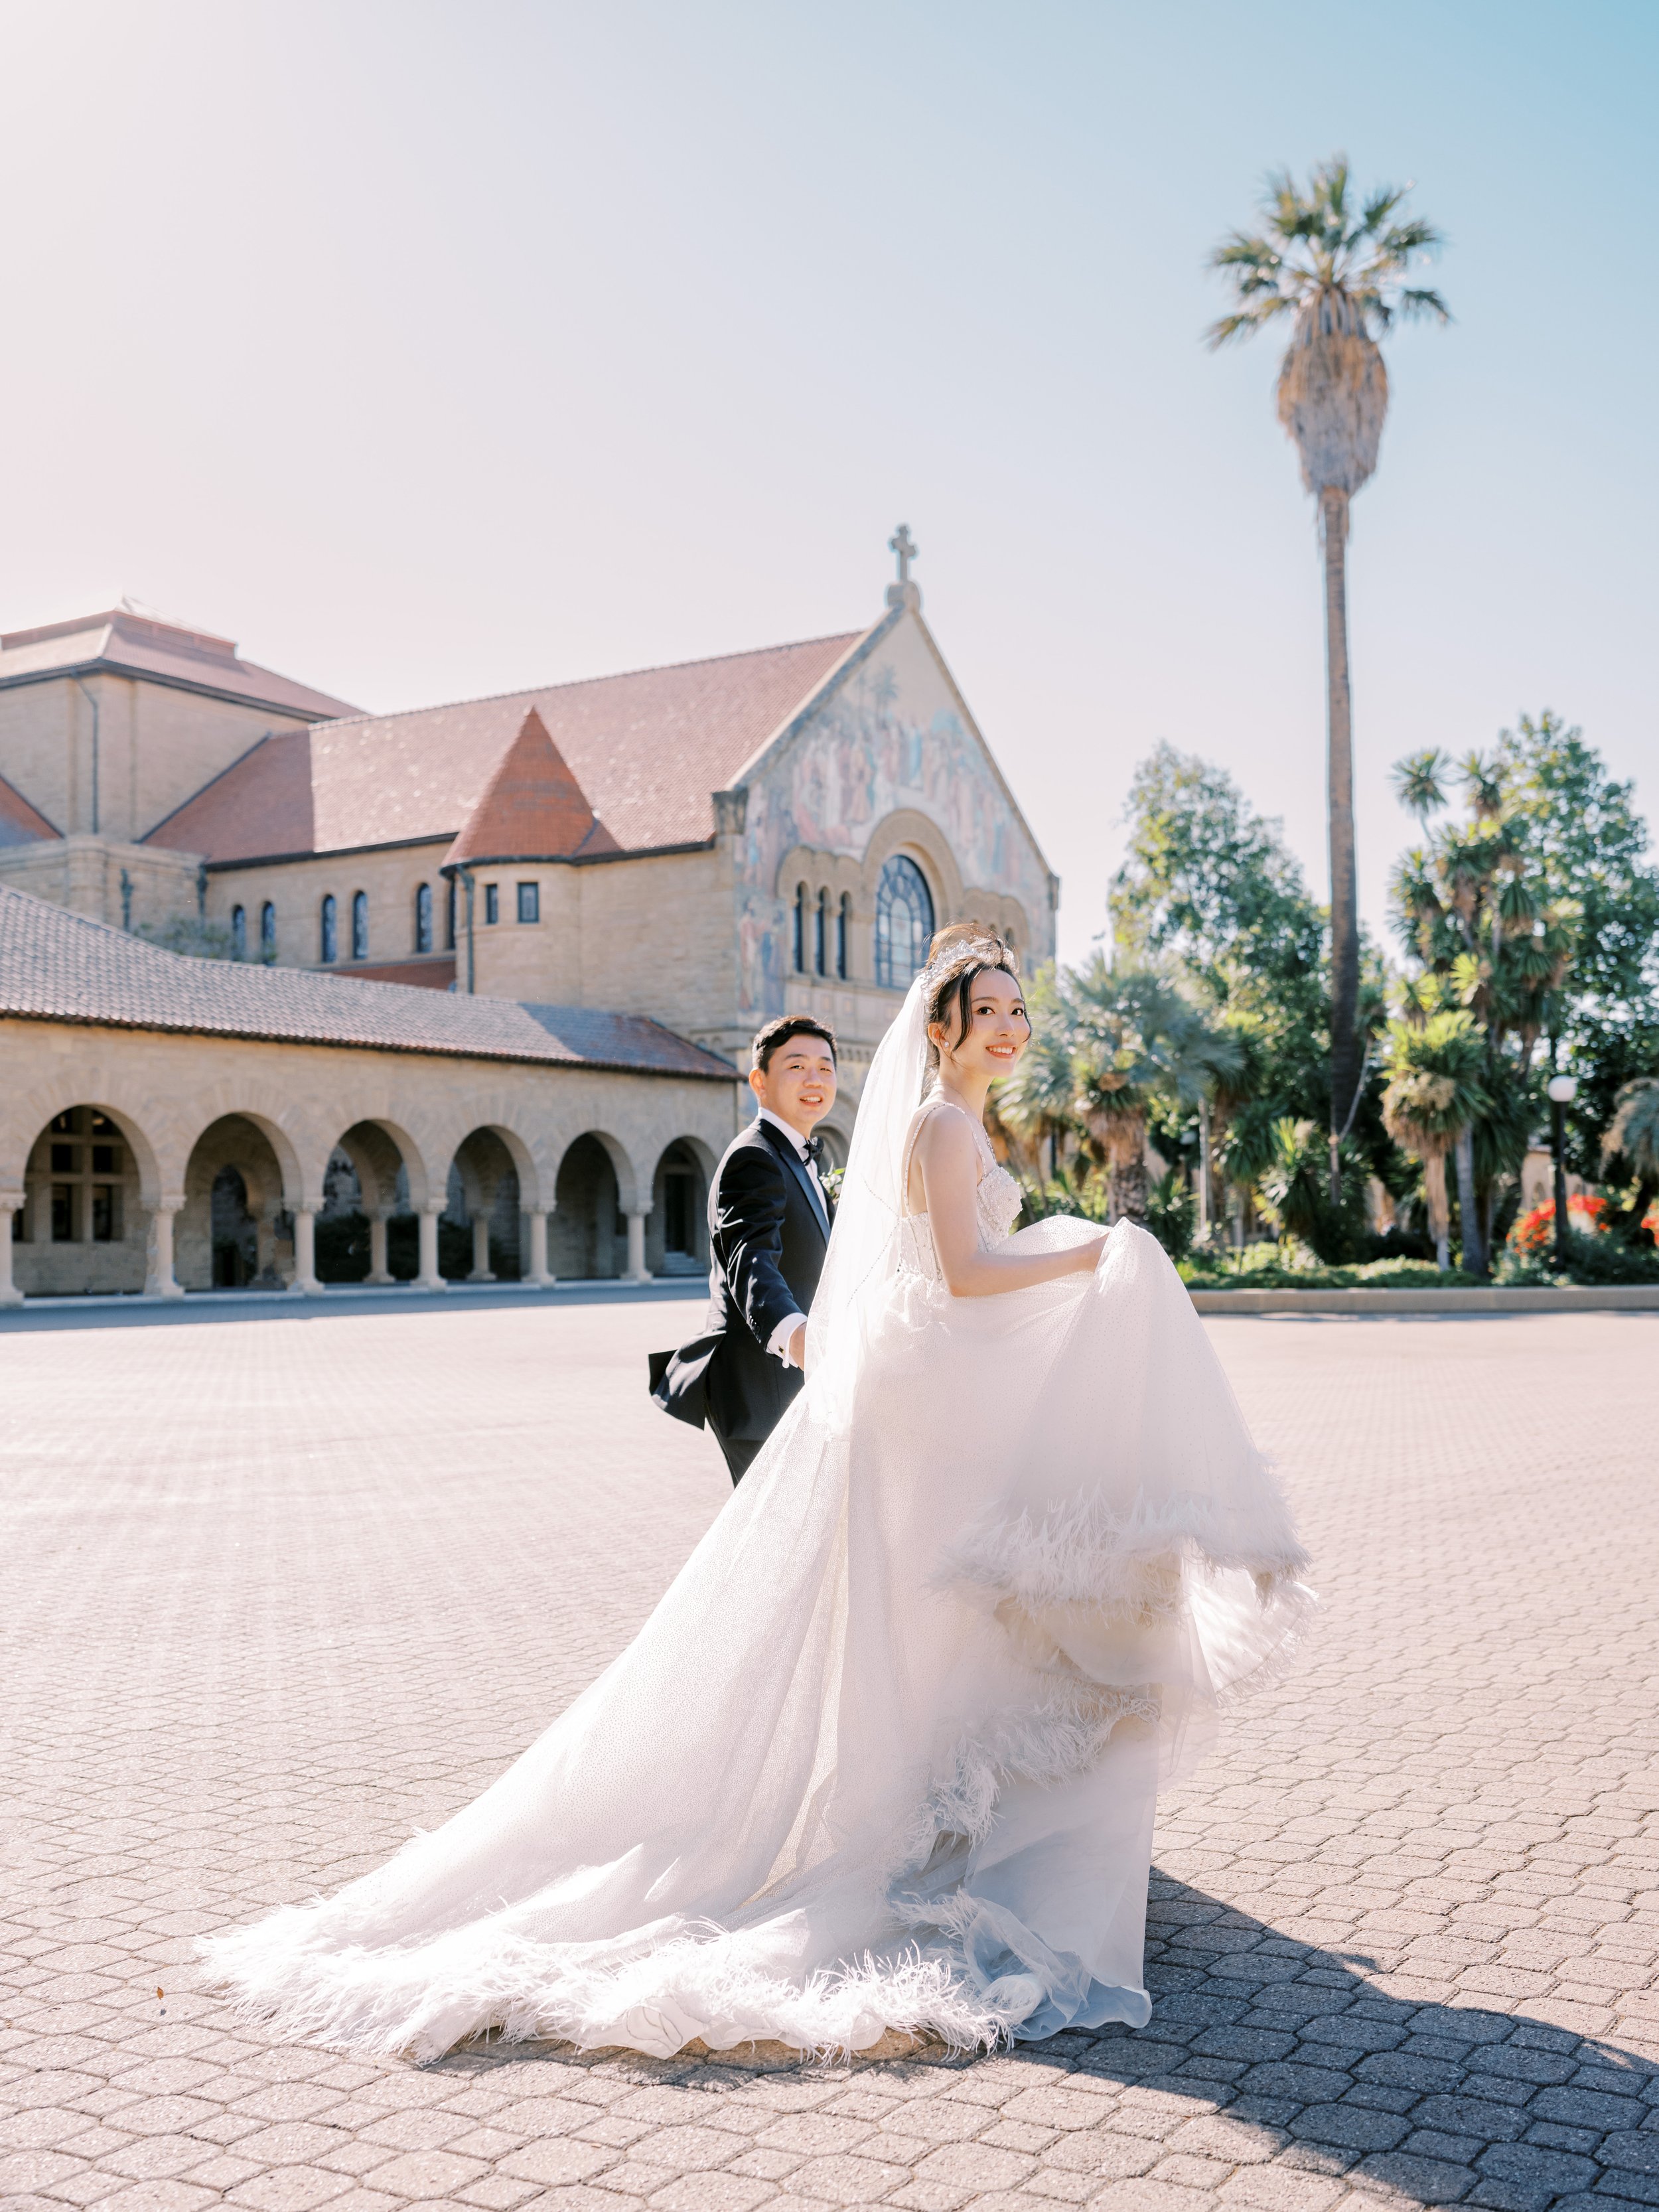 Stella Yang Photography 10-8 wedding at Stanford and San Francisco Westin hotel  (26 of 41).jpg